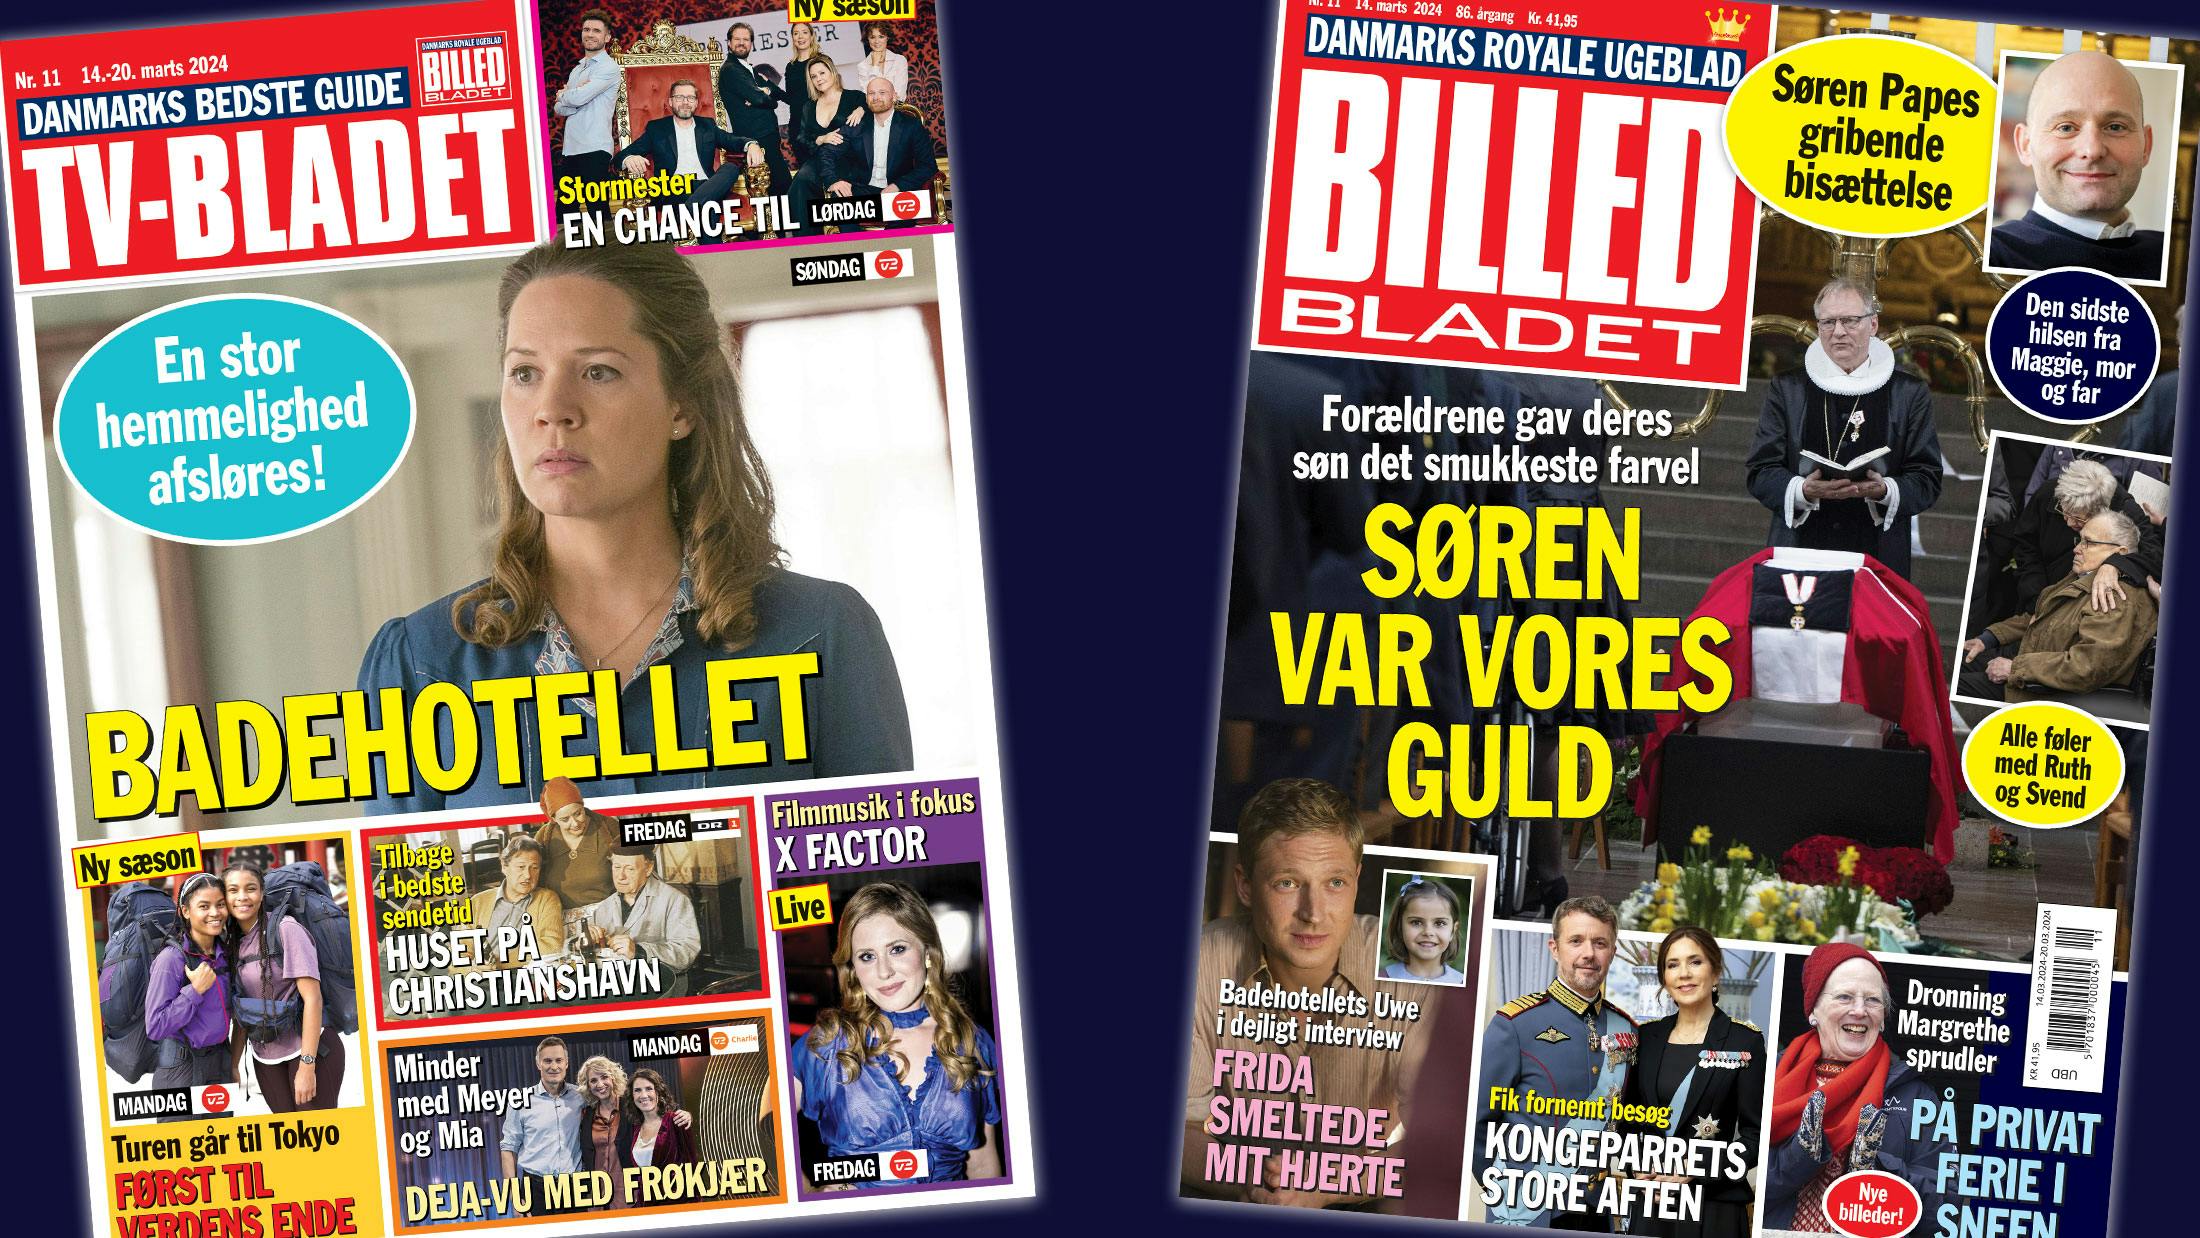 https://imgix.billedbladet.dk/2024-03-13/webgrafik_bb11-forsider.jpg